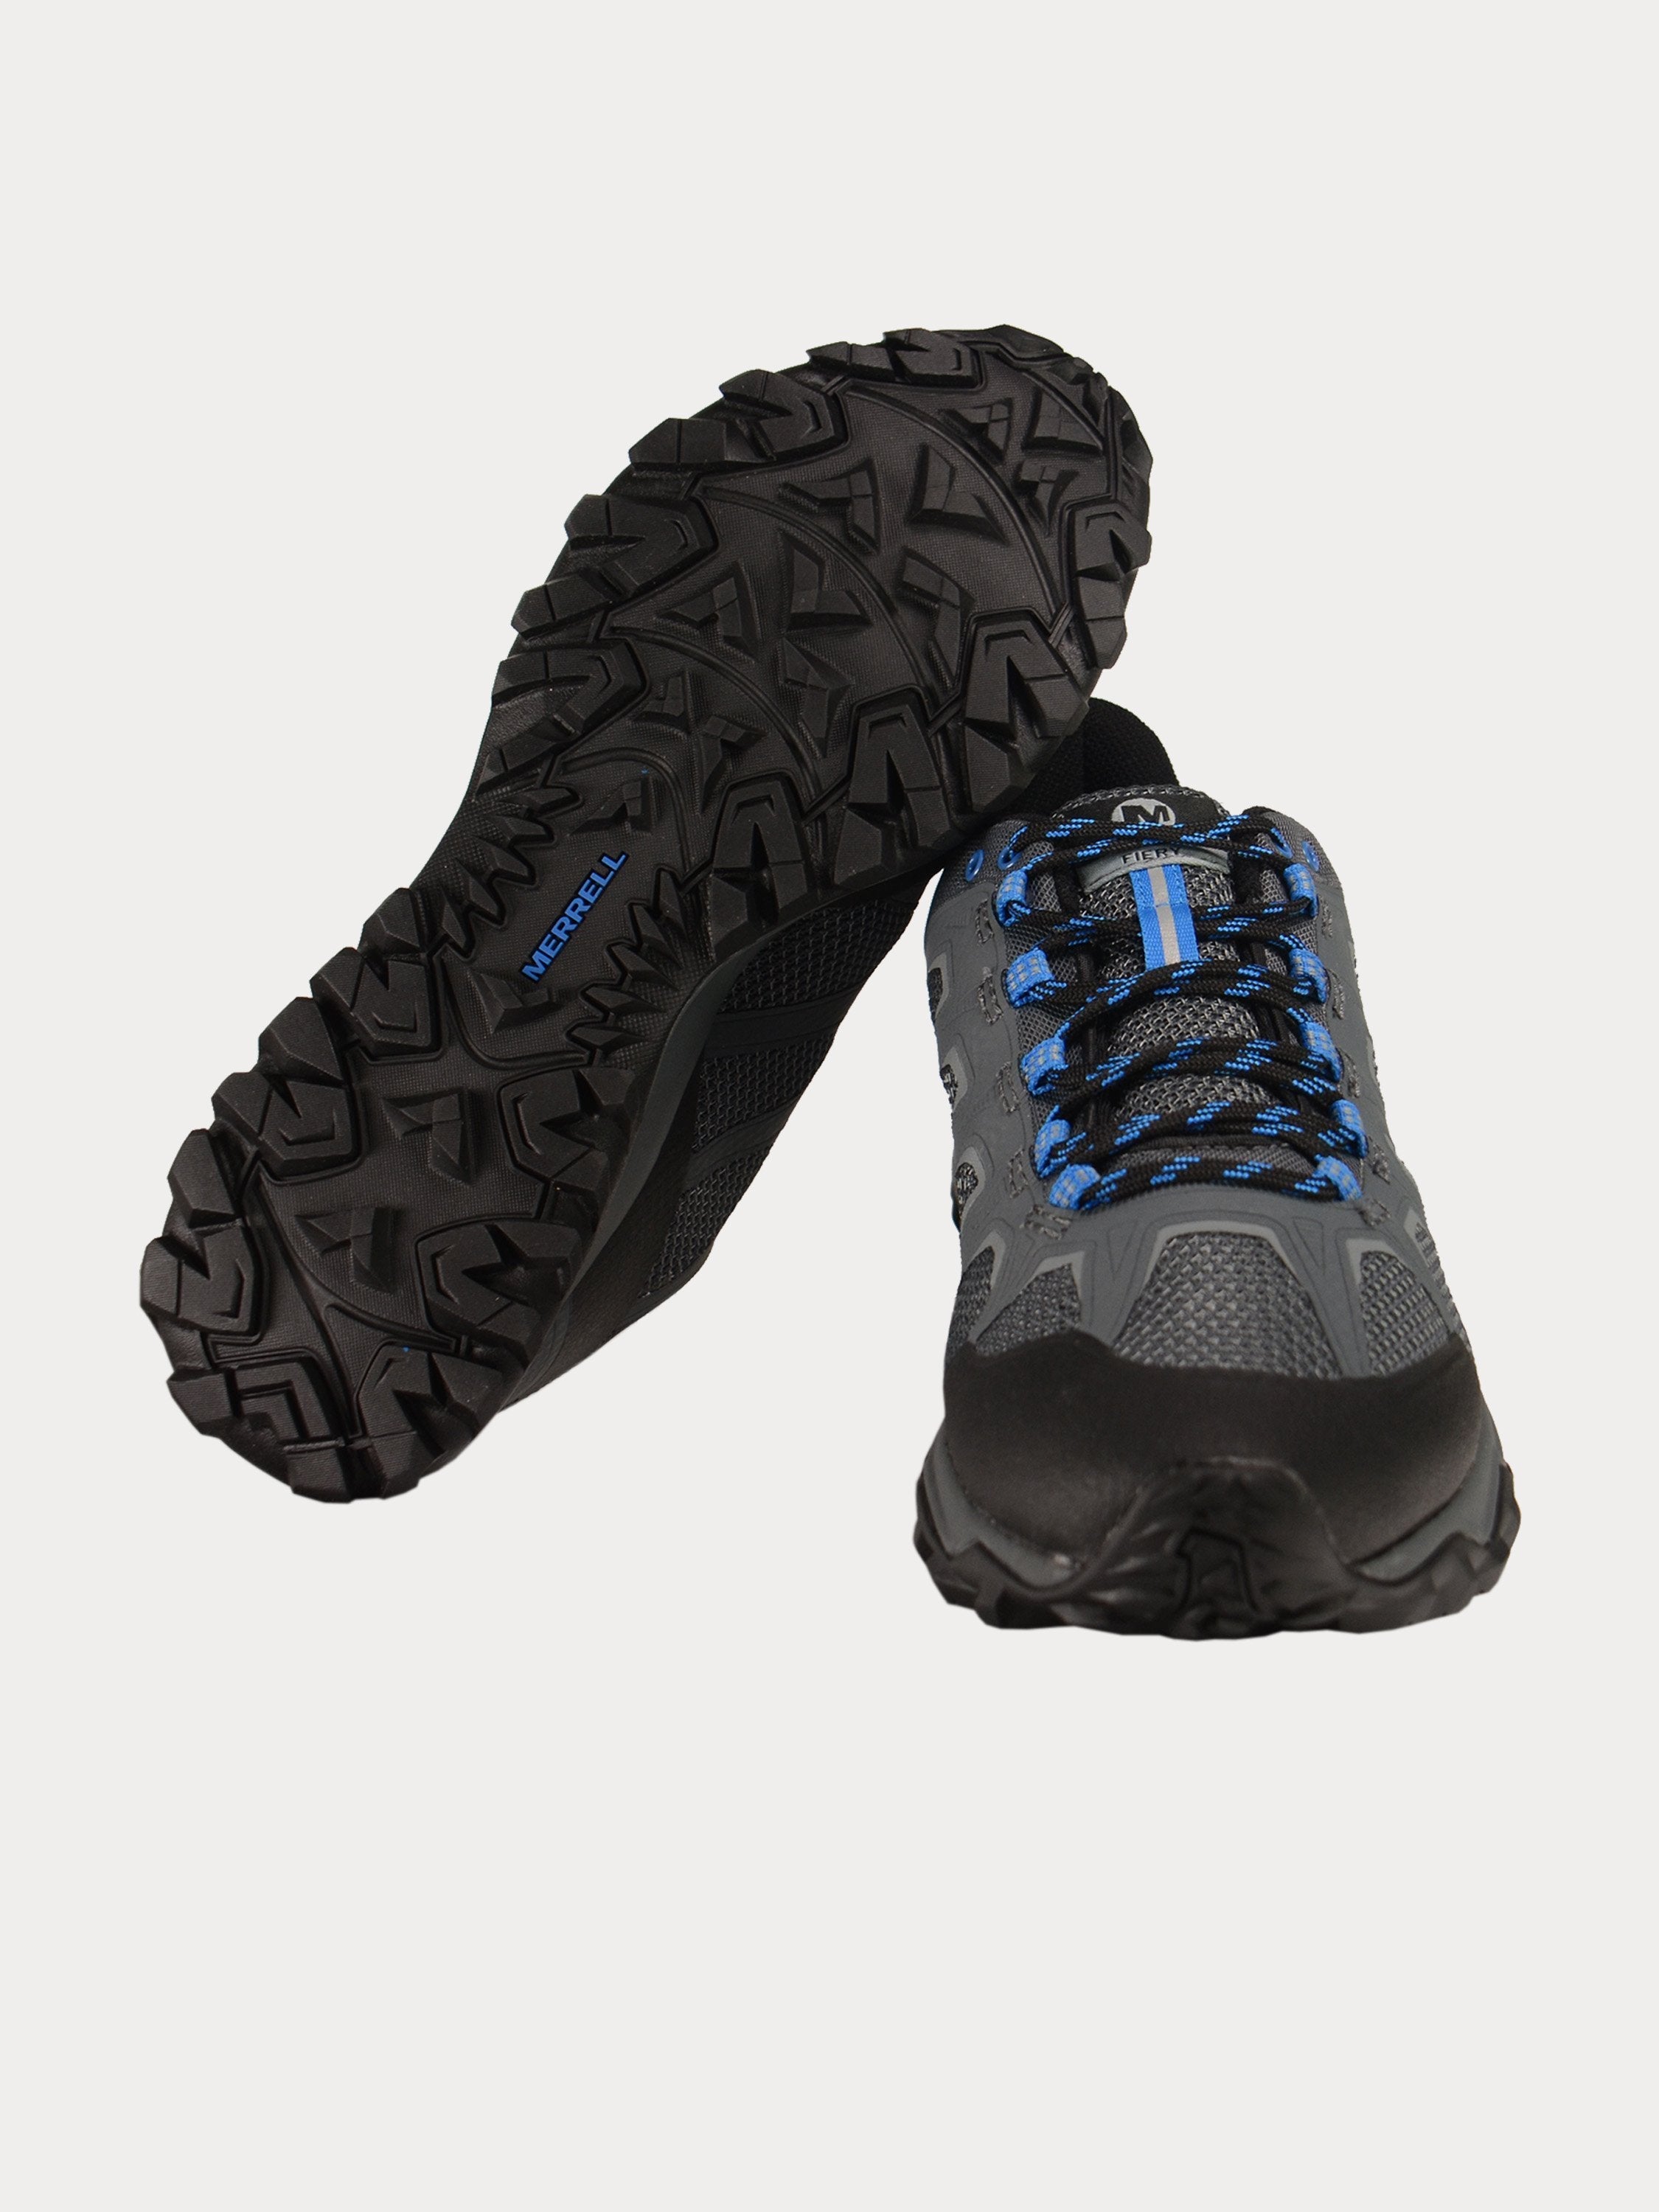 Merrell Men's Fiery Running Shoes #color_Grey